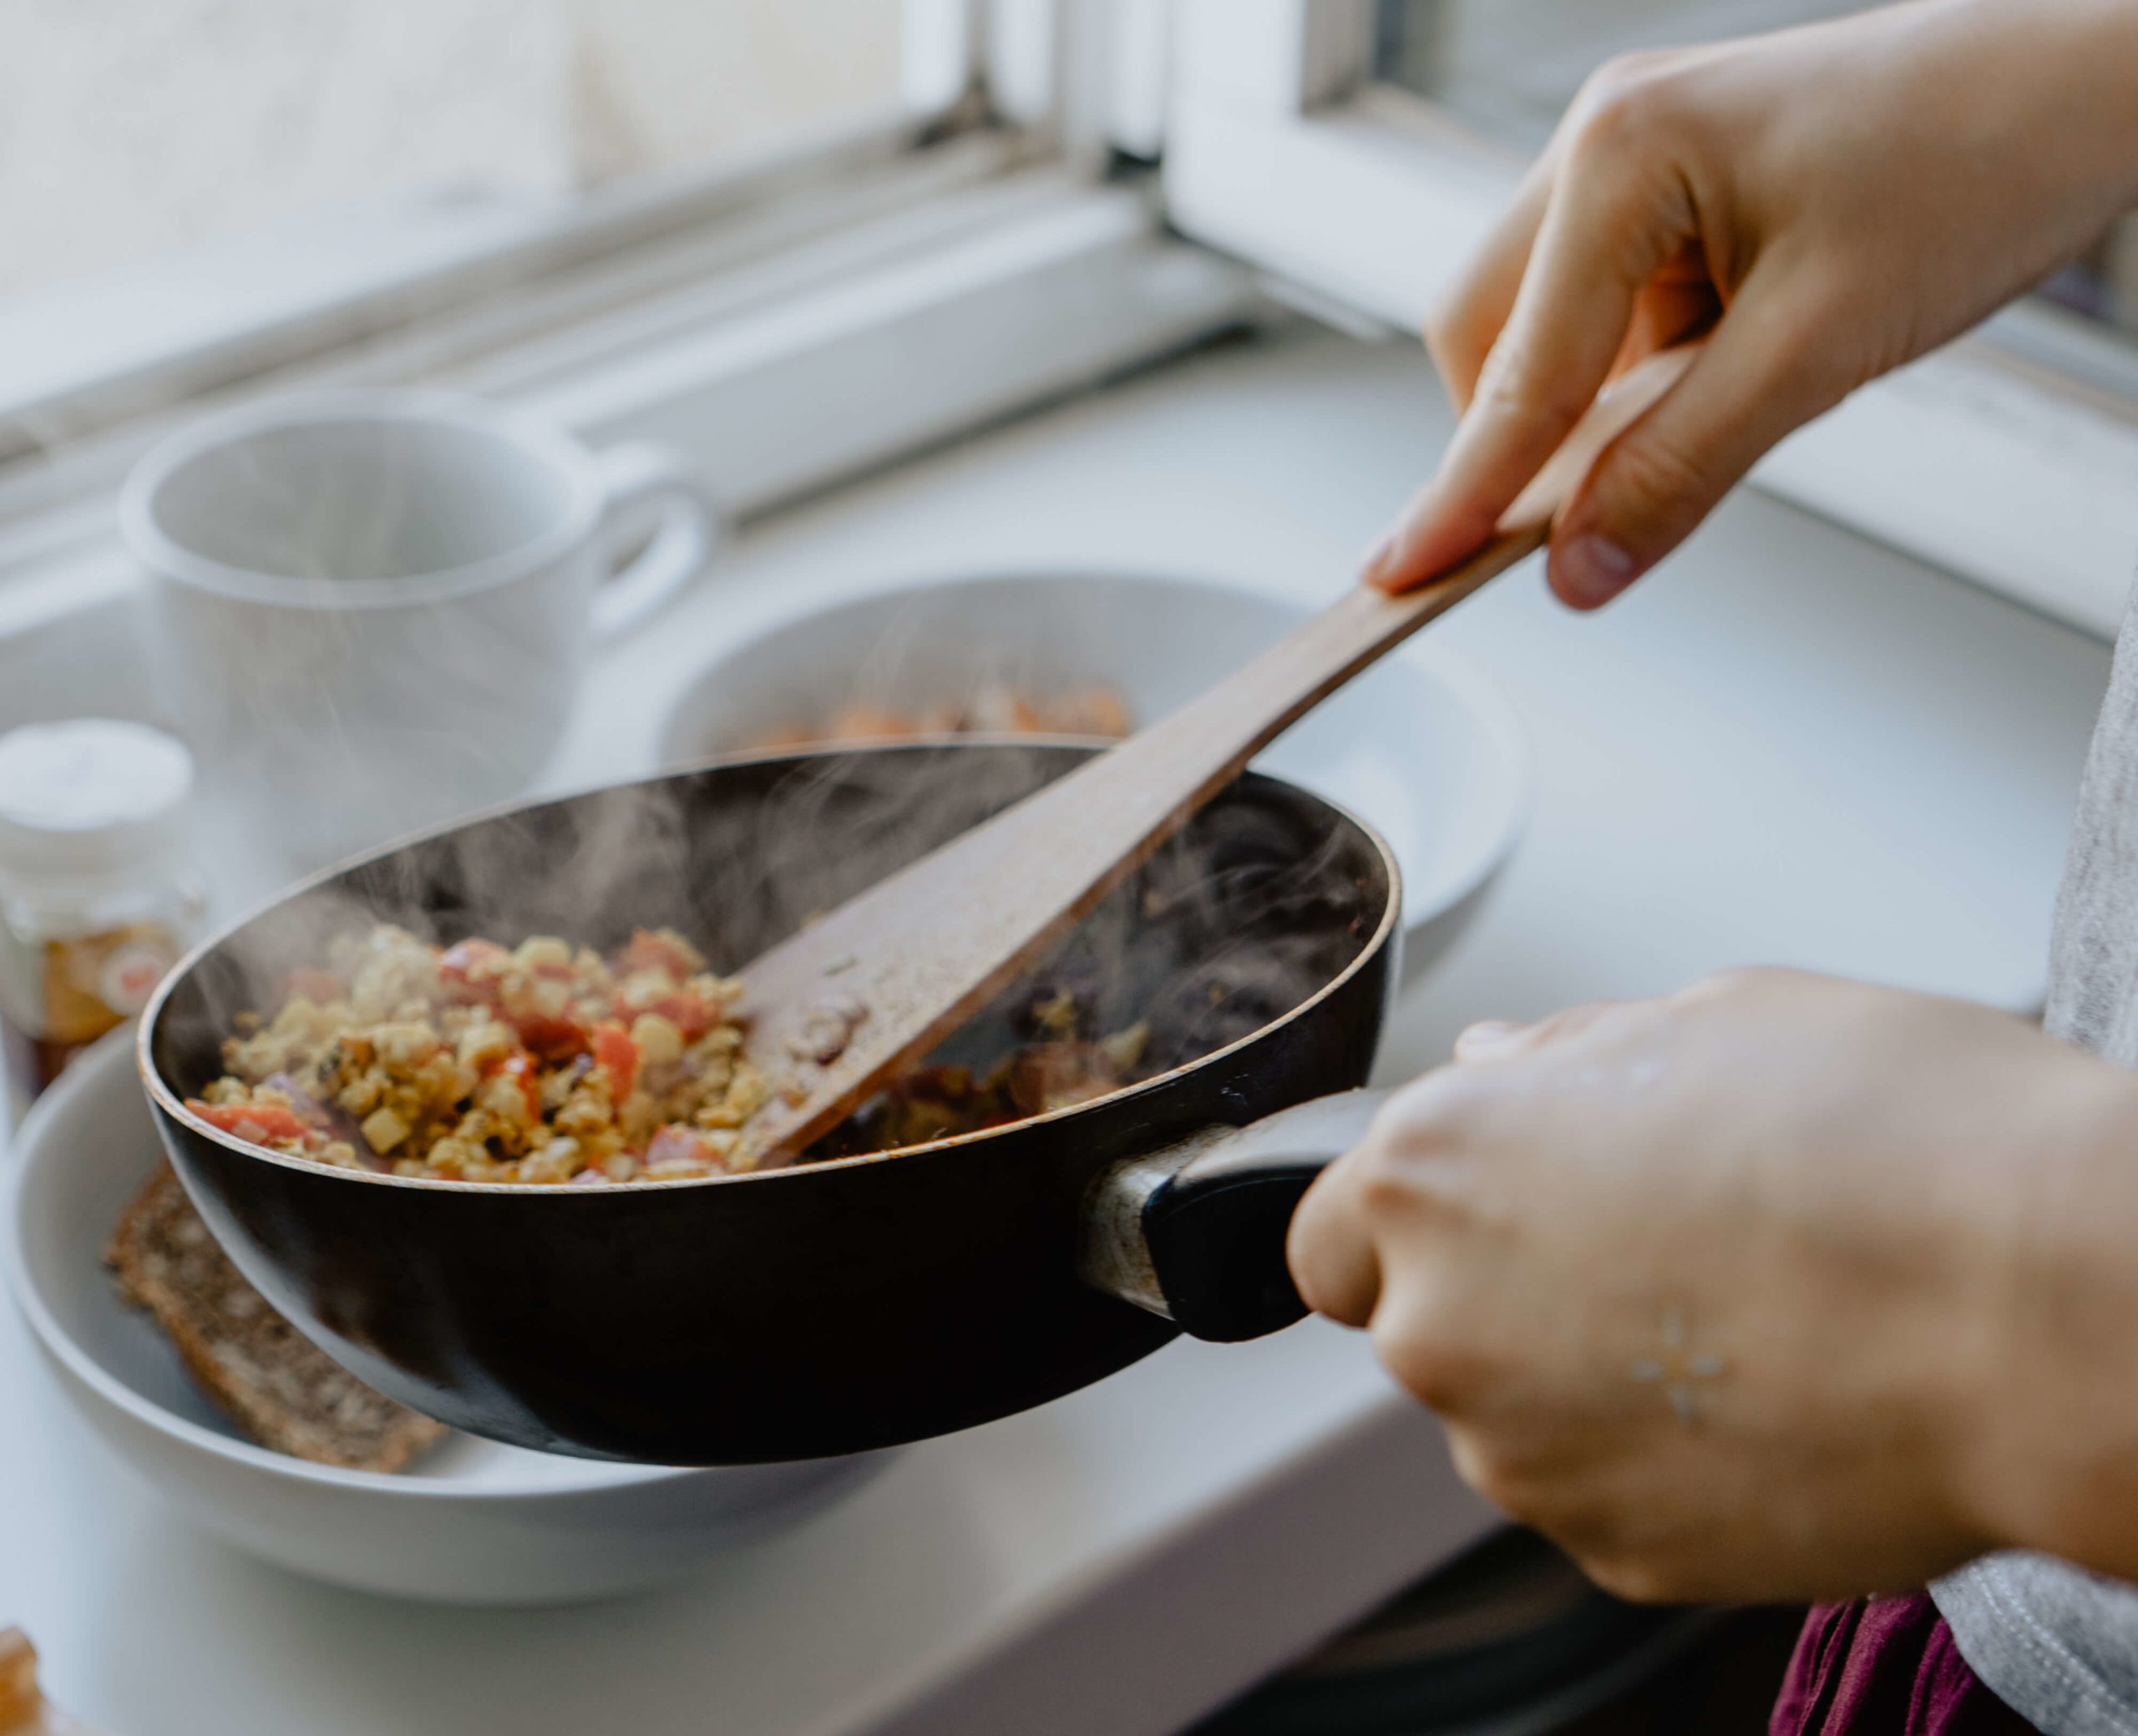 Person stirring food in frypan pan